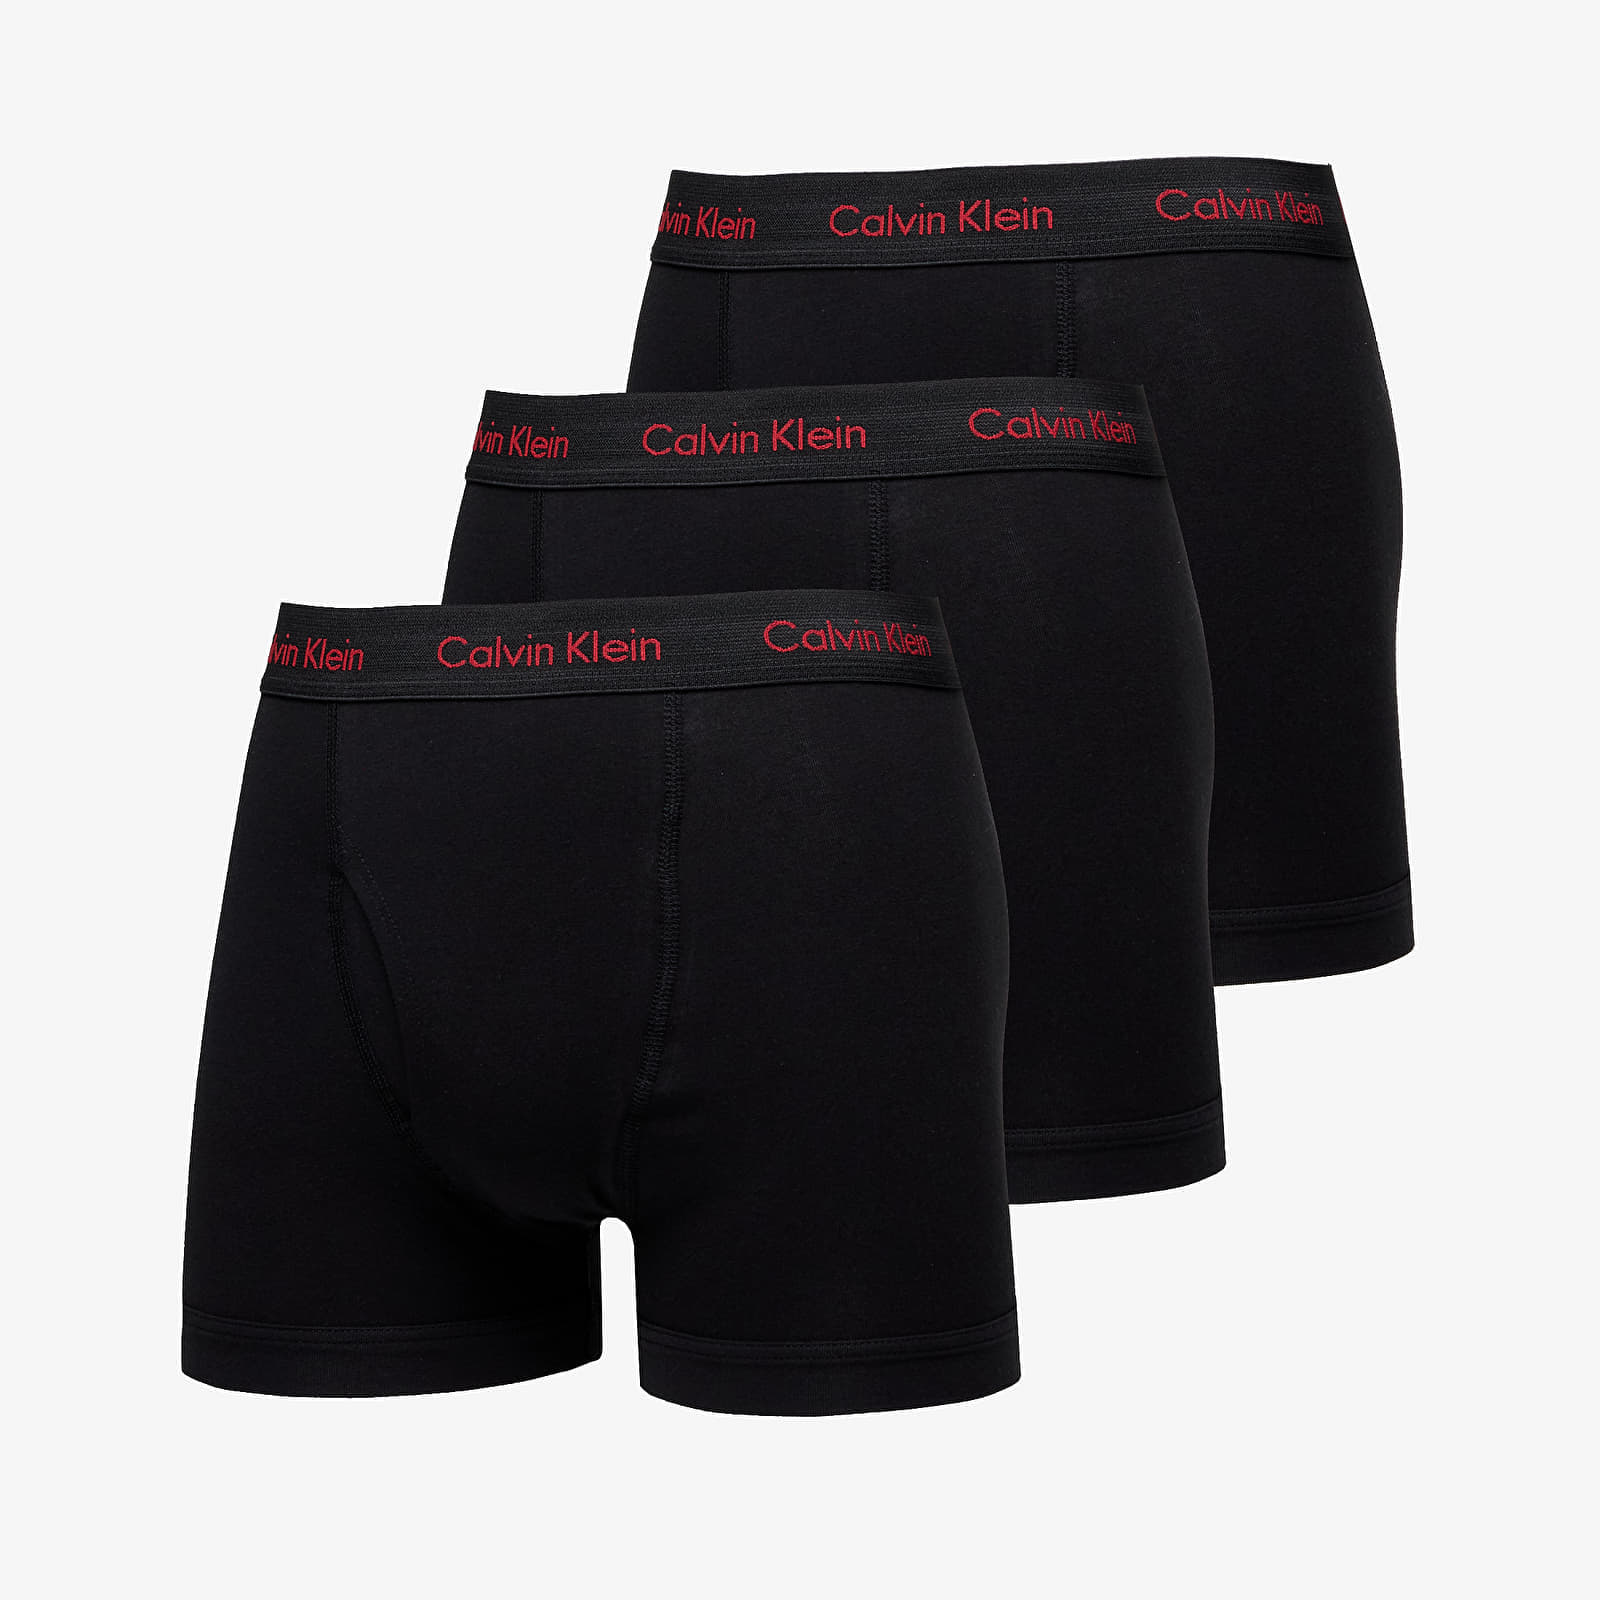 Боксерки Calvin Klein Cotton Stretch Wicking Technology Classic Fit Trunk 3-Pack Black